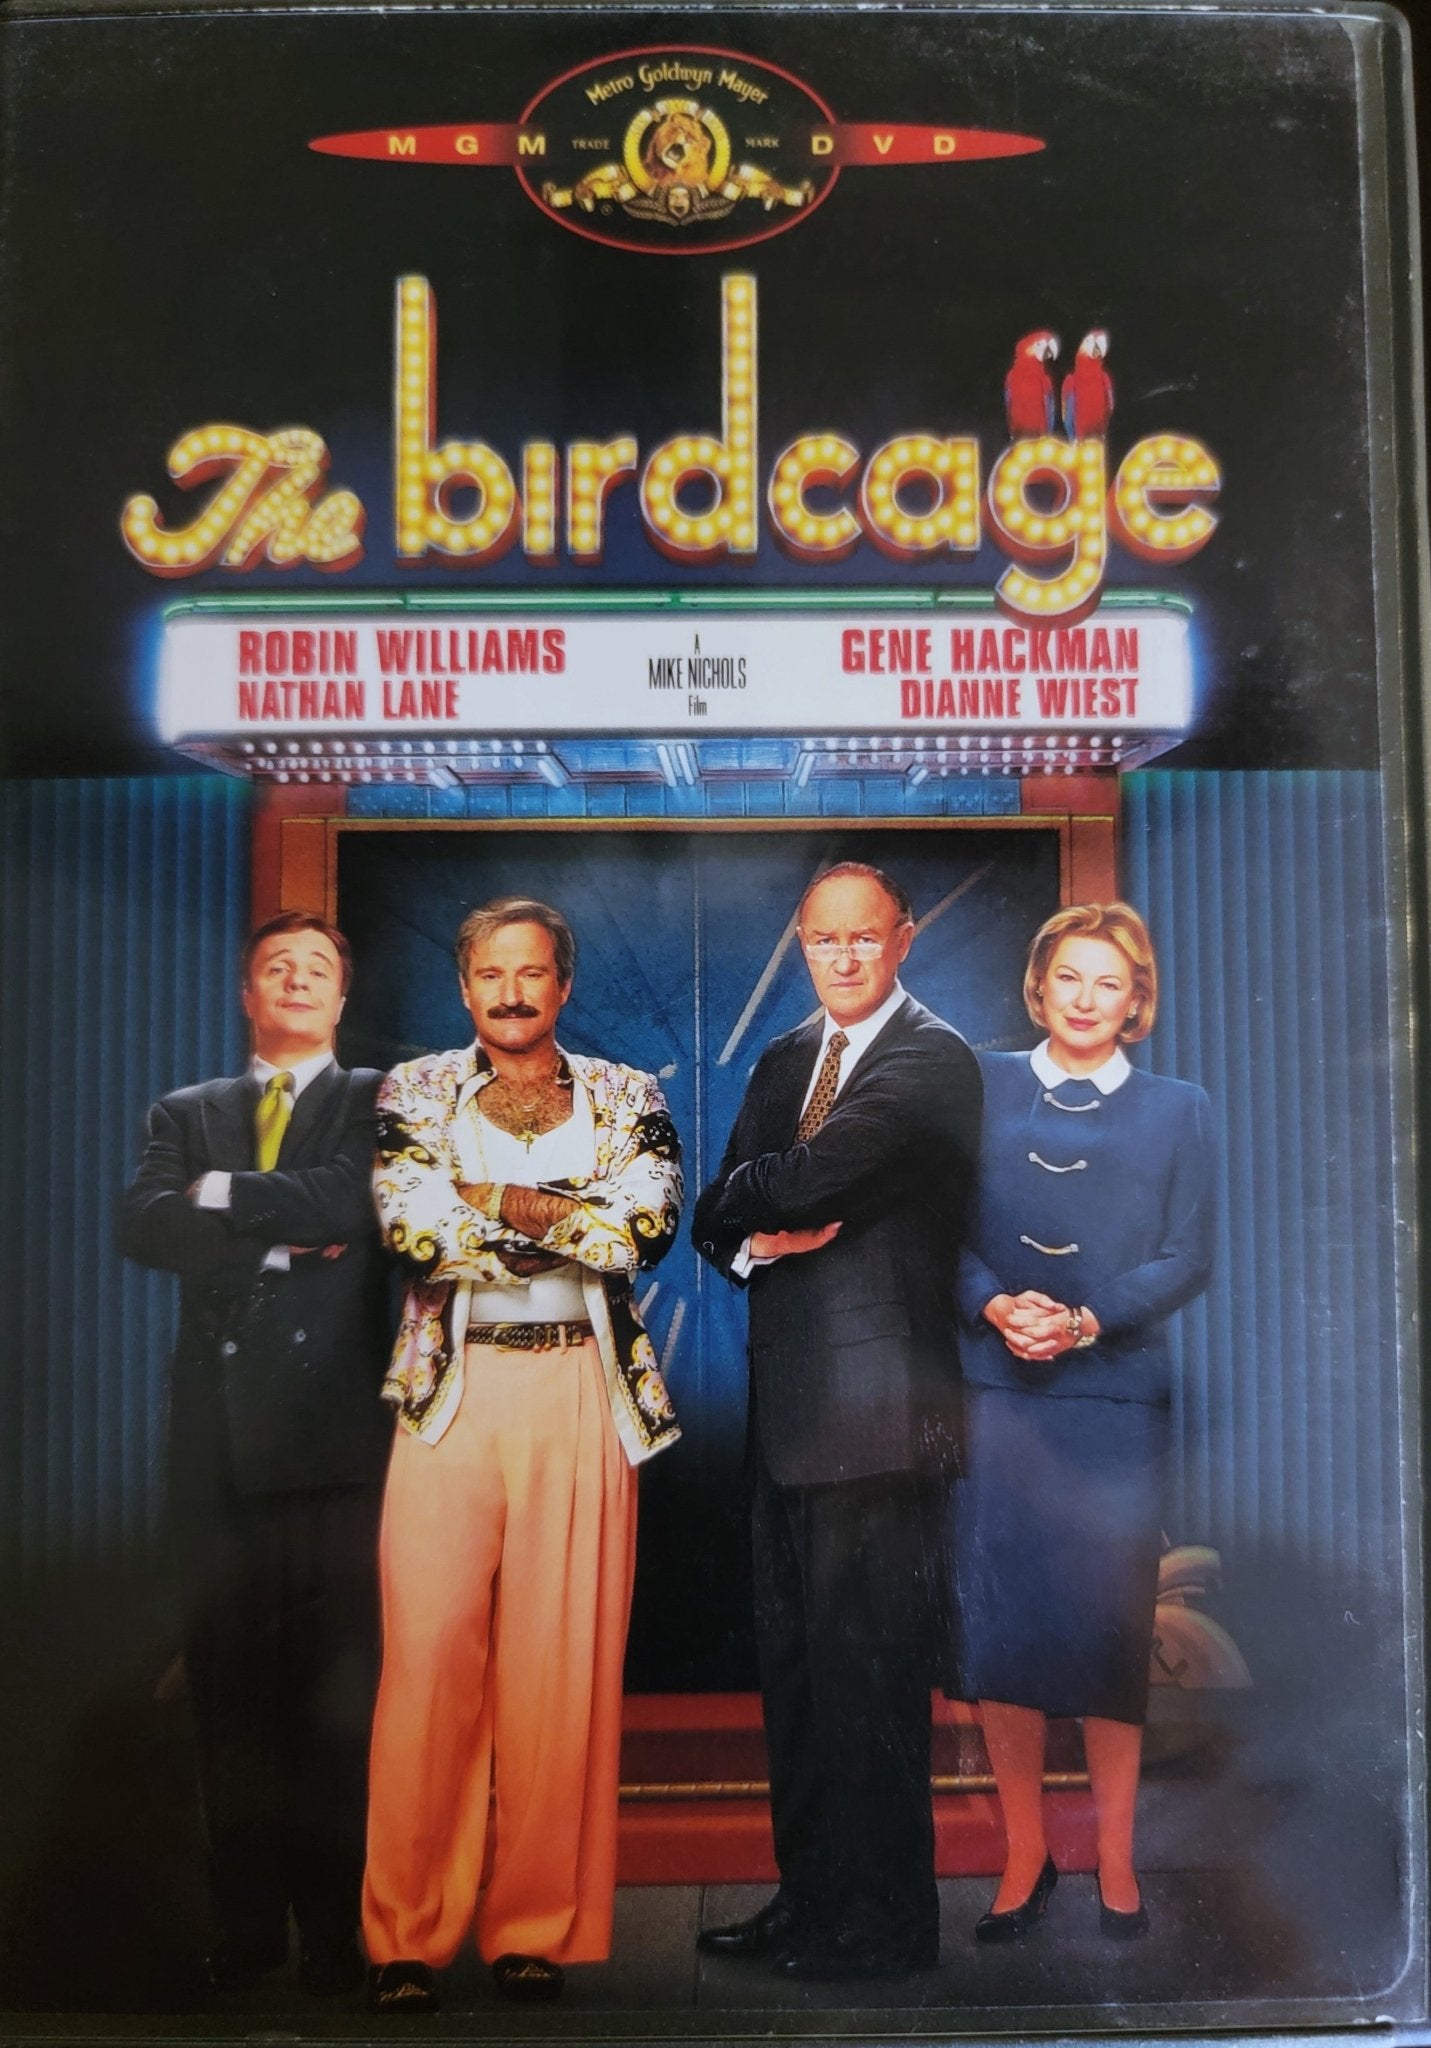 MGM - The Birdcage | DVD | Widescreen - DVD - Steady Bunny Shop